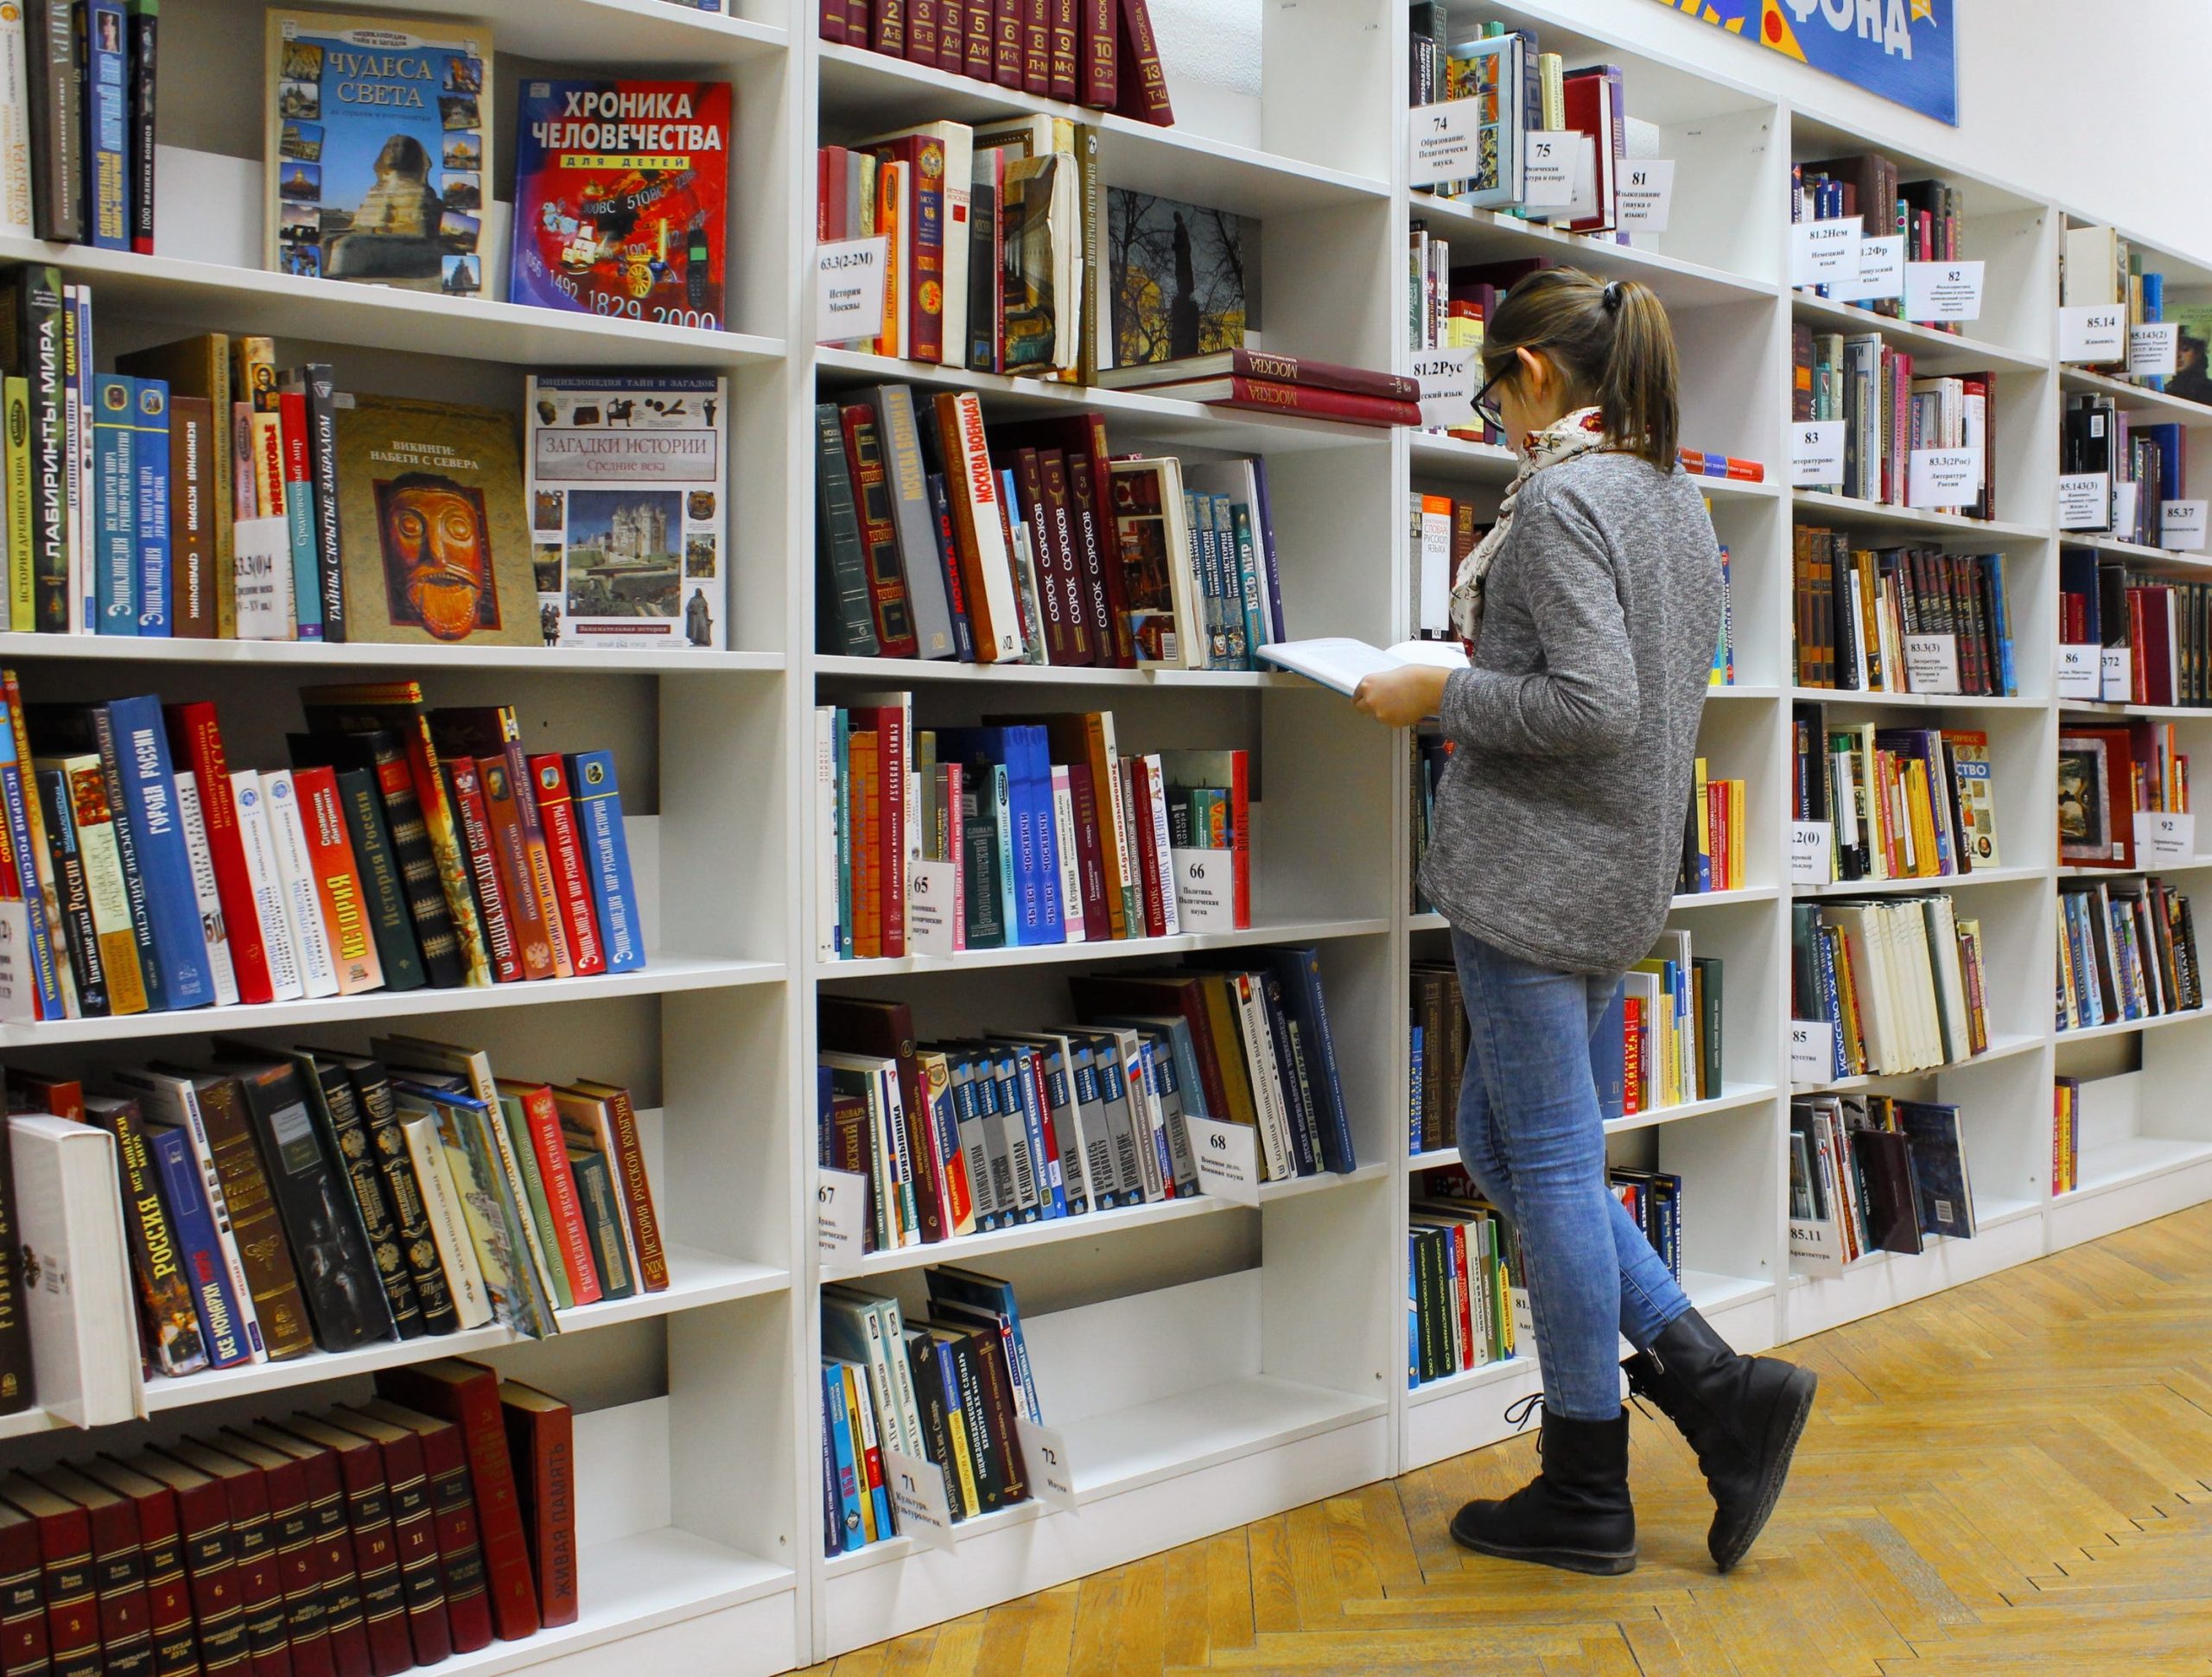 Mengenali minat dengan berkunjung ke toko buku atau perpustakaan